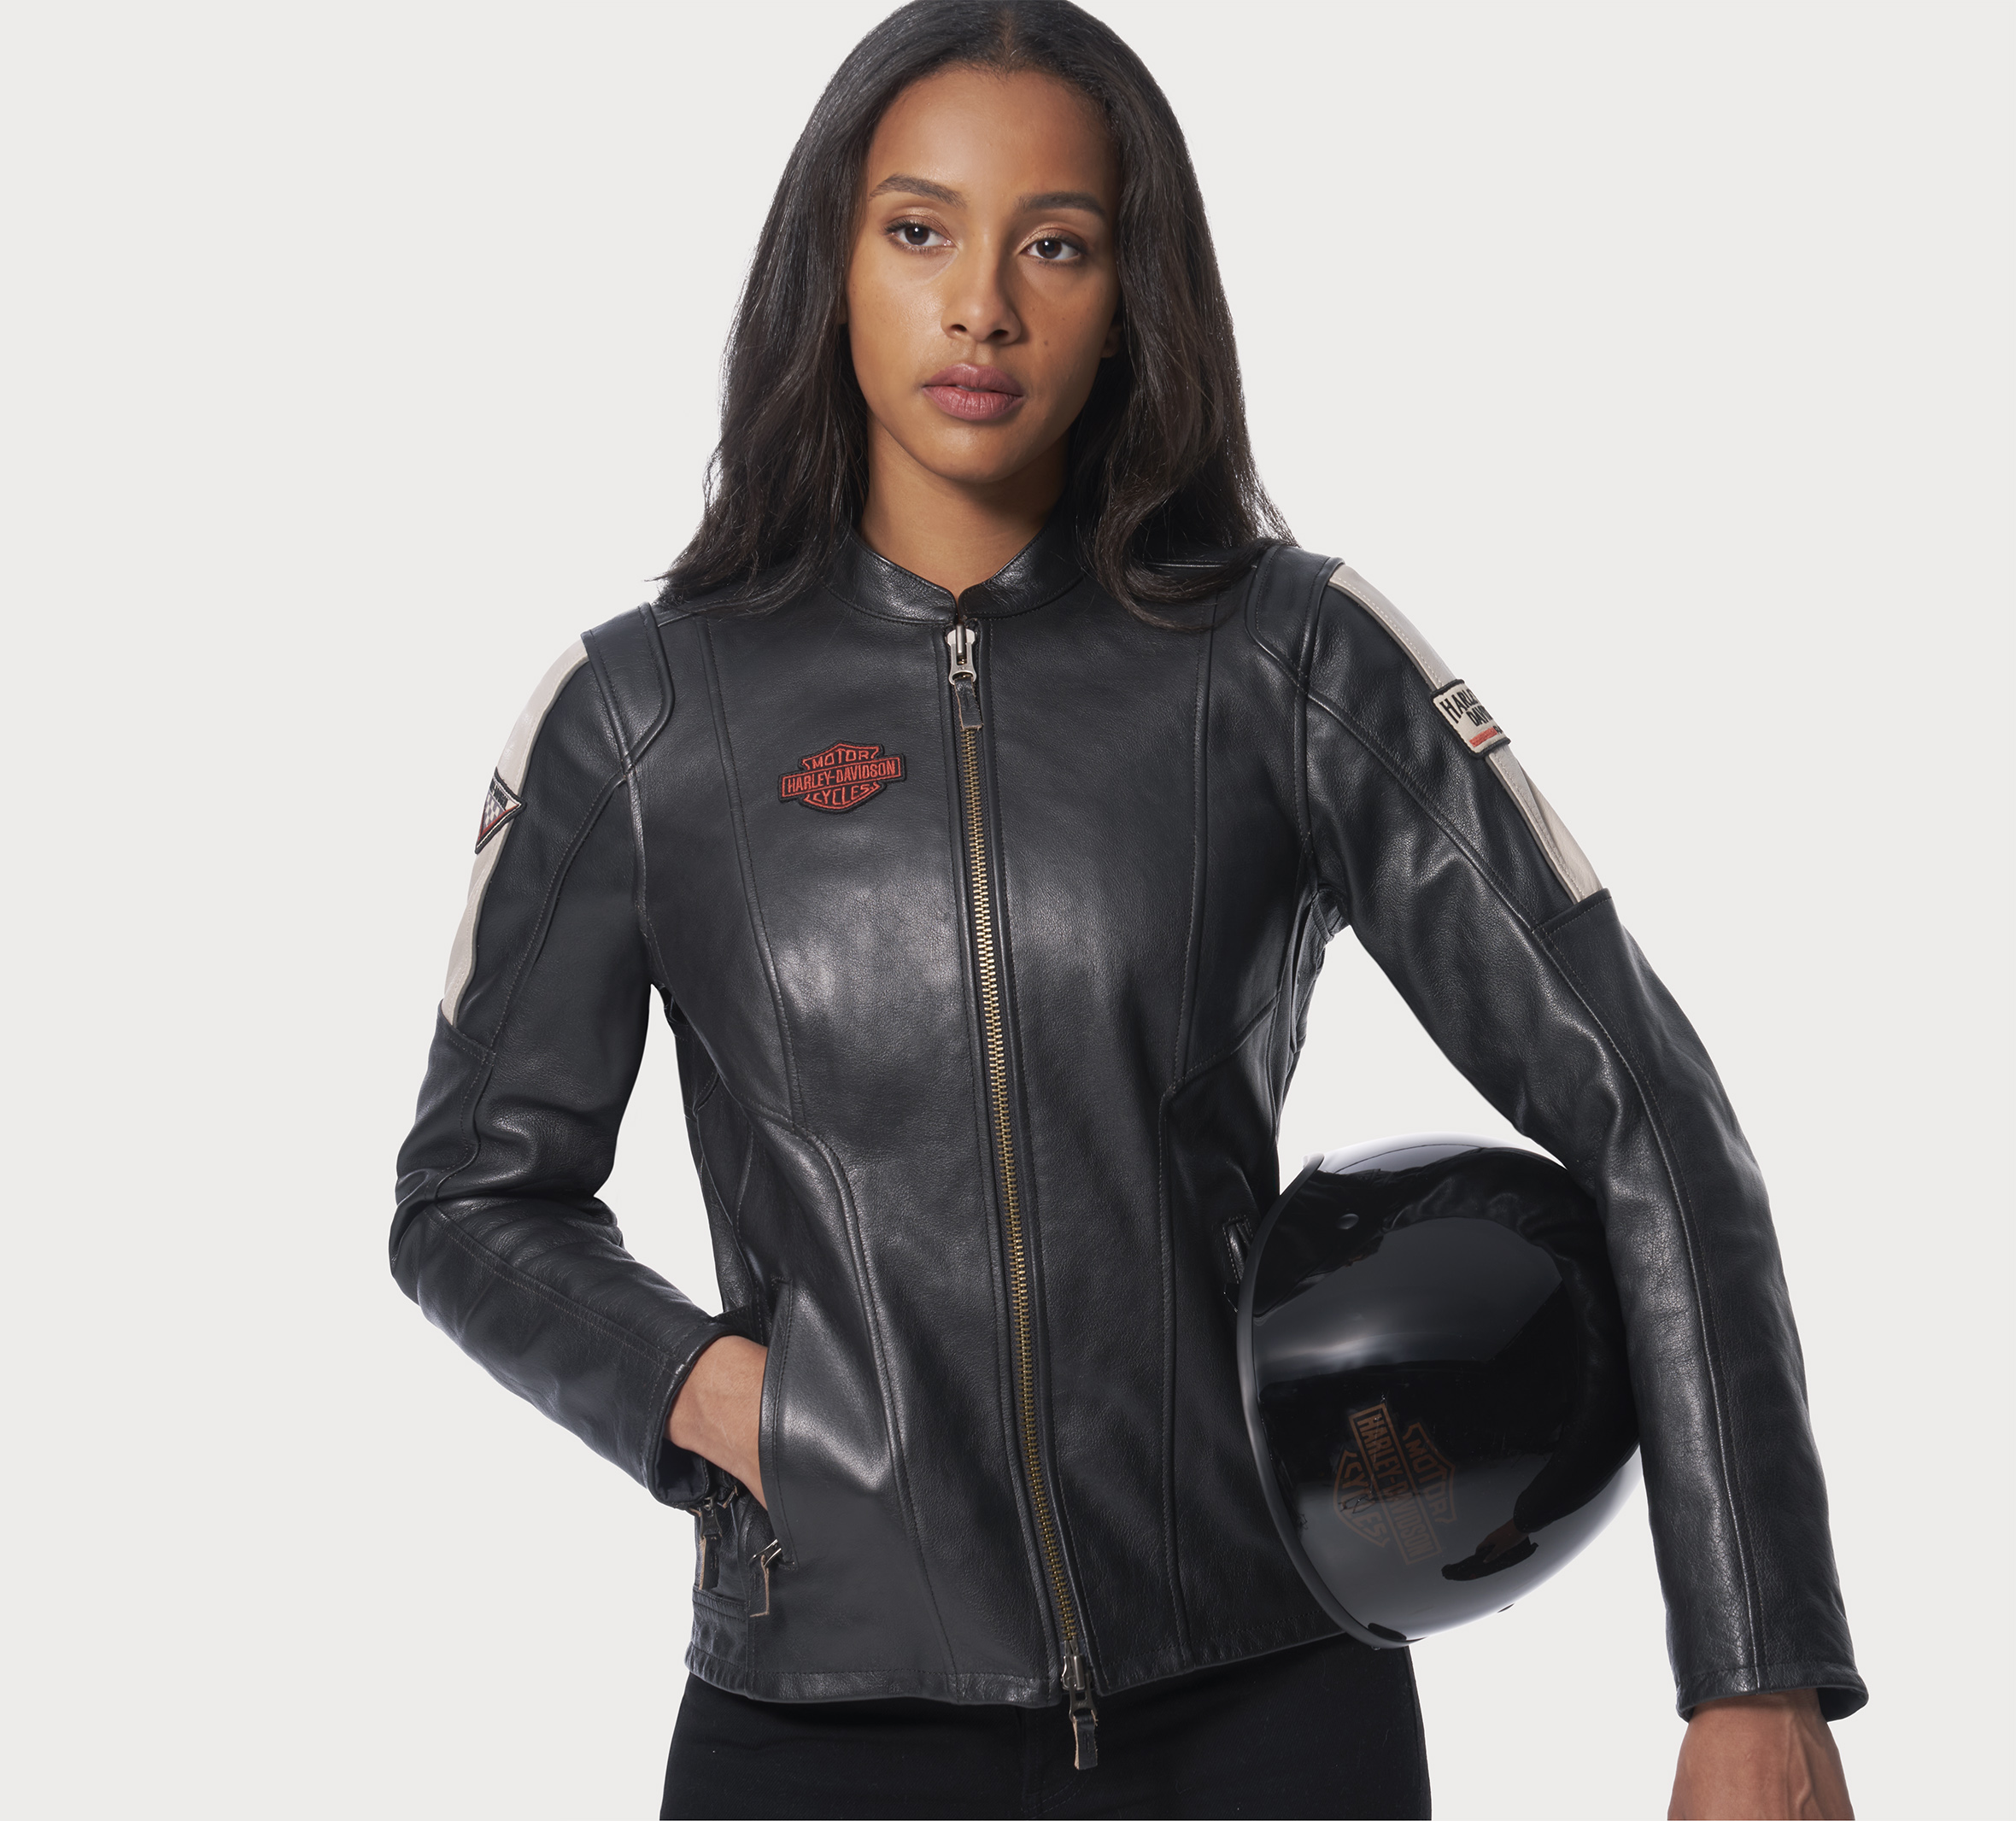 Women's Enduro Leather Riding Jacket | Harley-Davidson USA